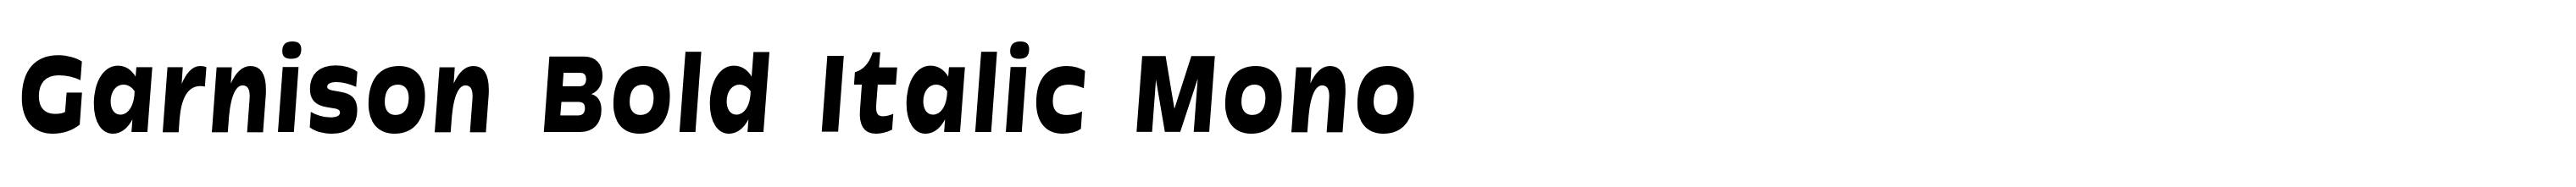 Garnison Bold Italic Mono